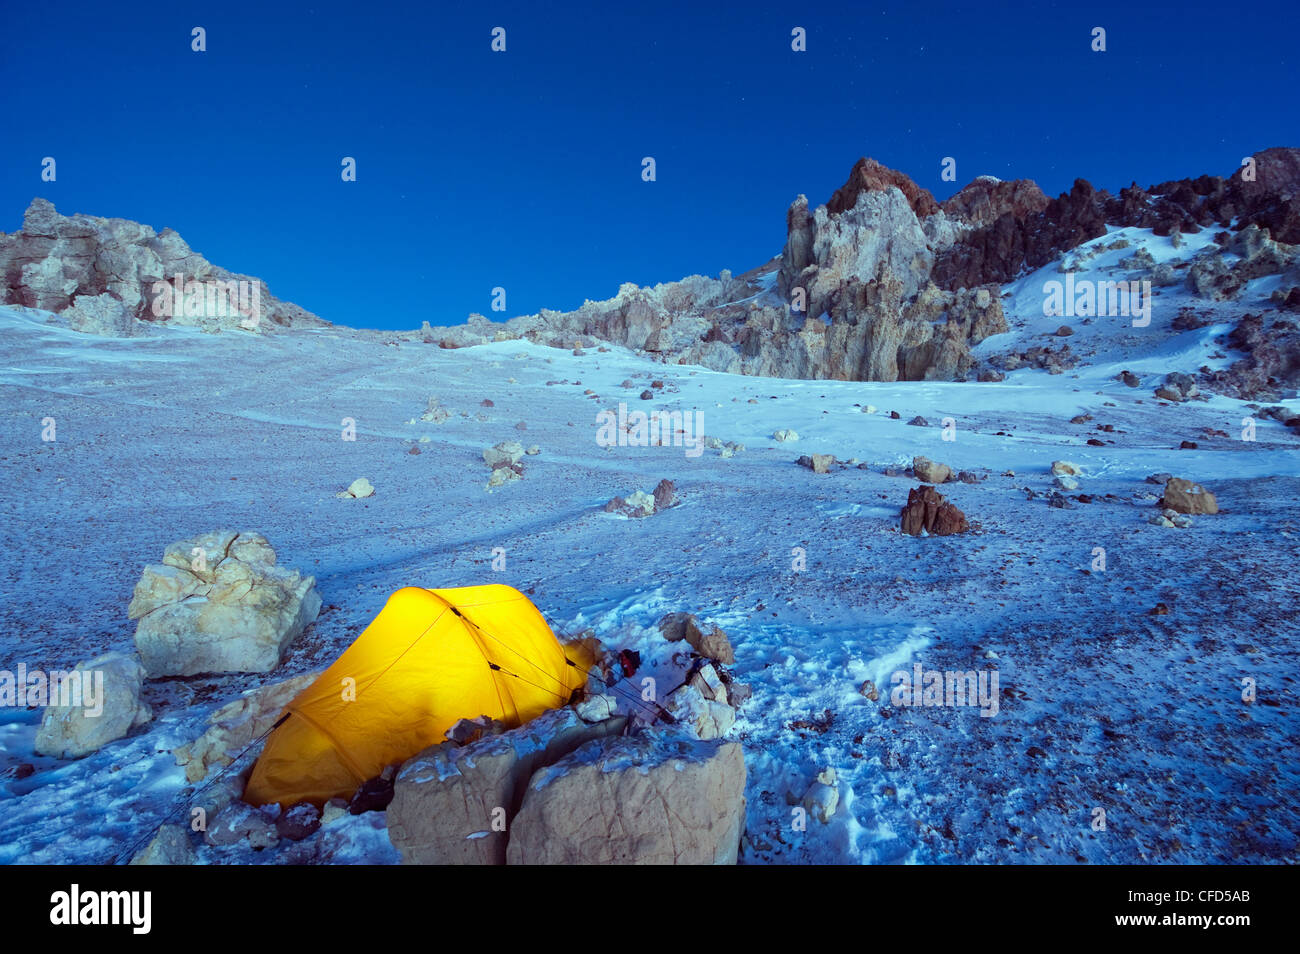 Illuminated tent at White Rocks campsite, Piedras Blancas, Aconcagua Provincial Park, Andes mountains, Argentina Stock Photo